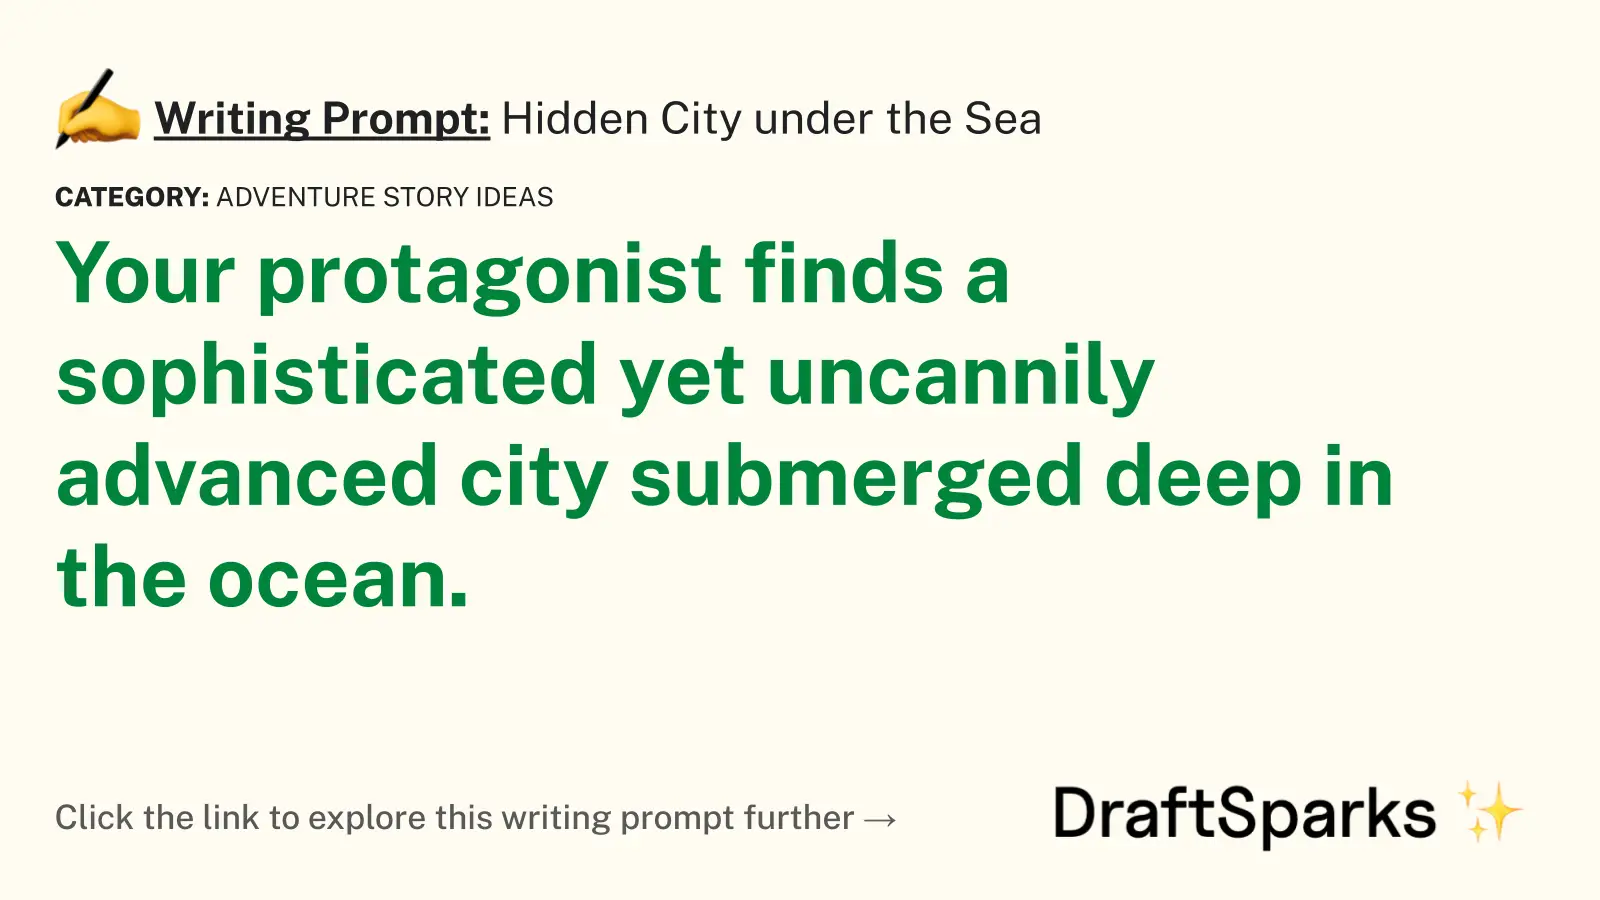 Hidden City under the Sea